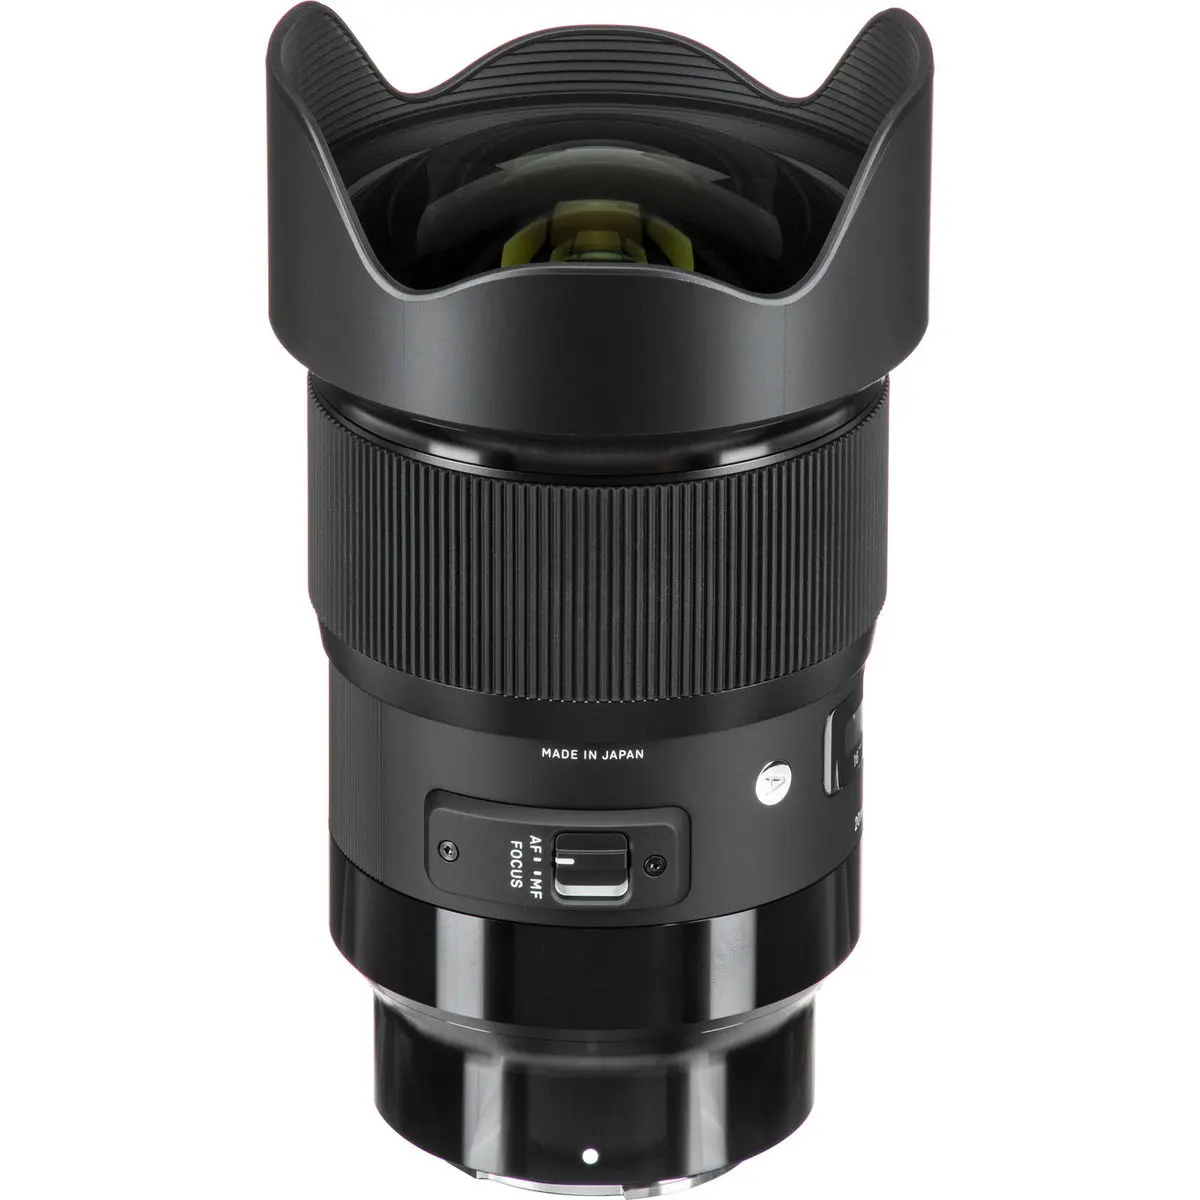 3. Sigma 20mm F1.4 DG HSM | A (Sony-E) Lens